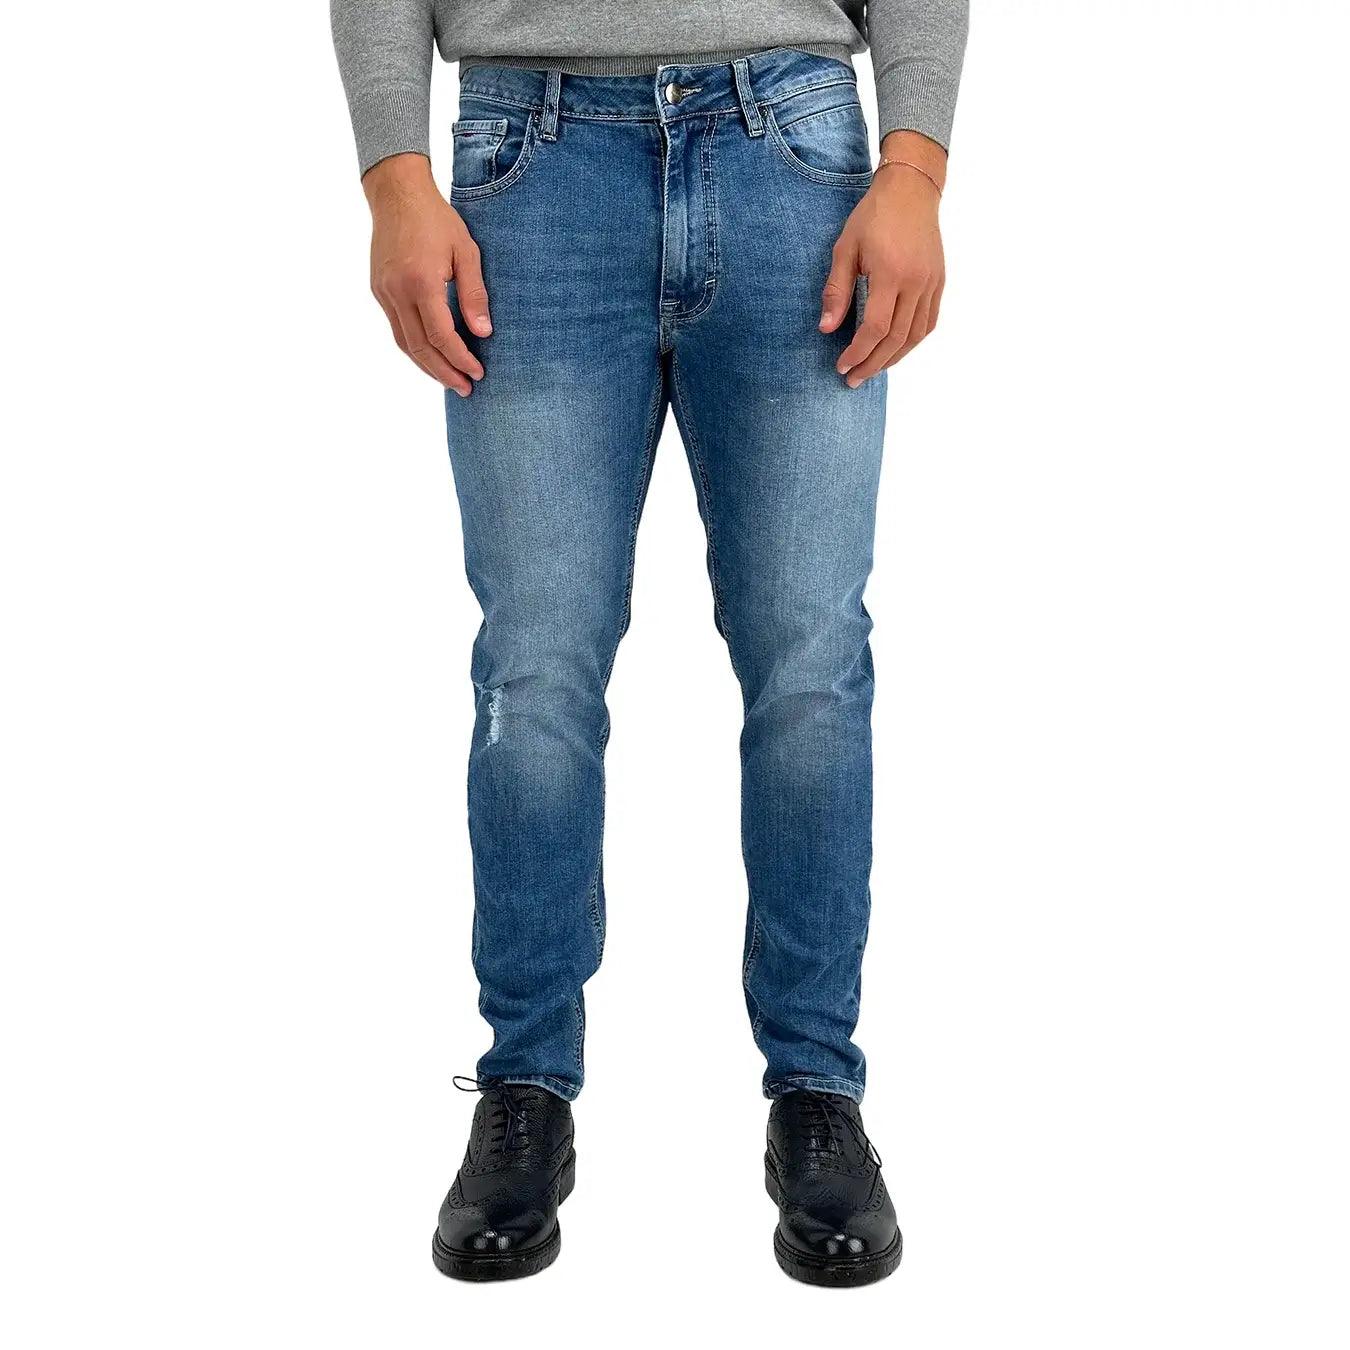 Markup Jeans, 595011, Regular fit Distrutto, Denim Blu, Bassiniboutique.it, 2023 a/i